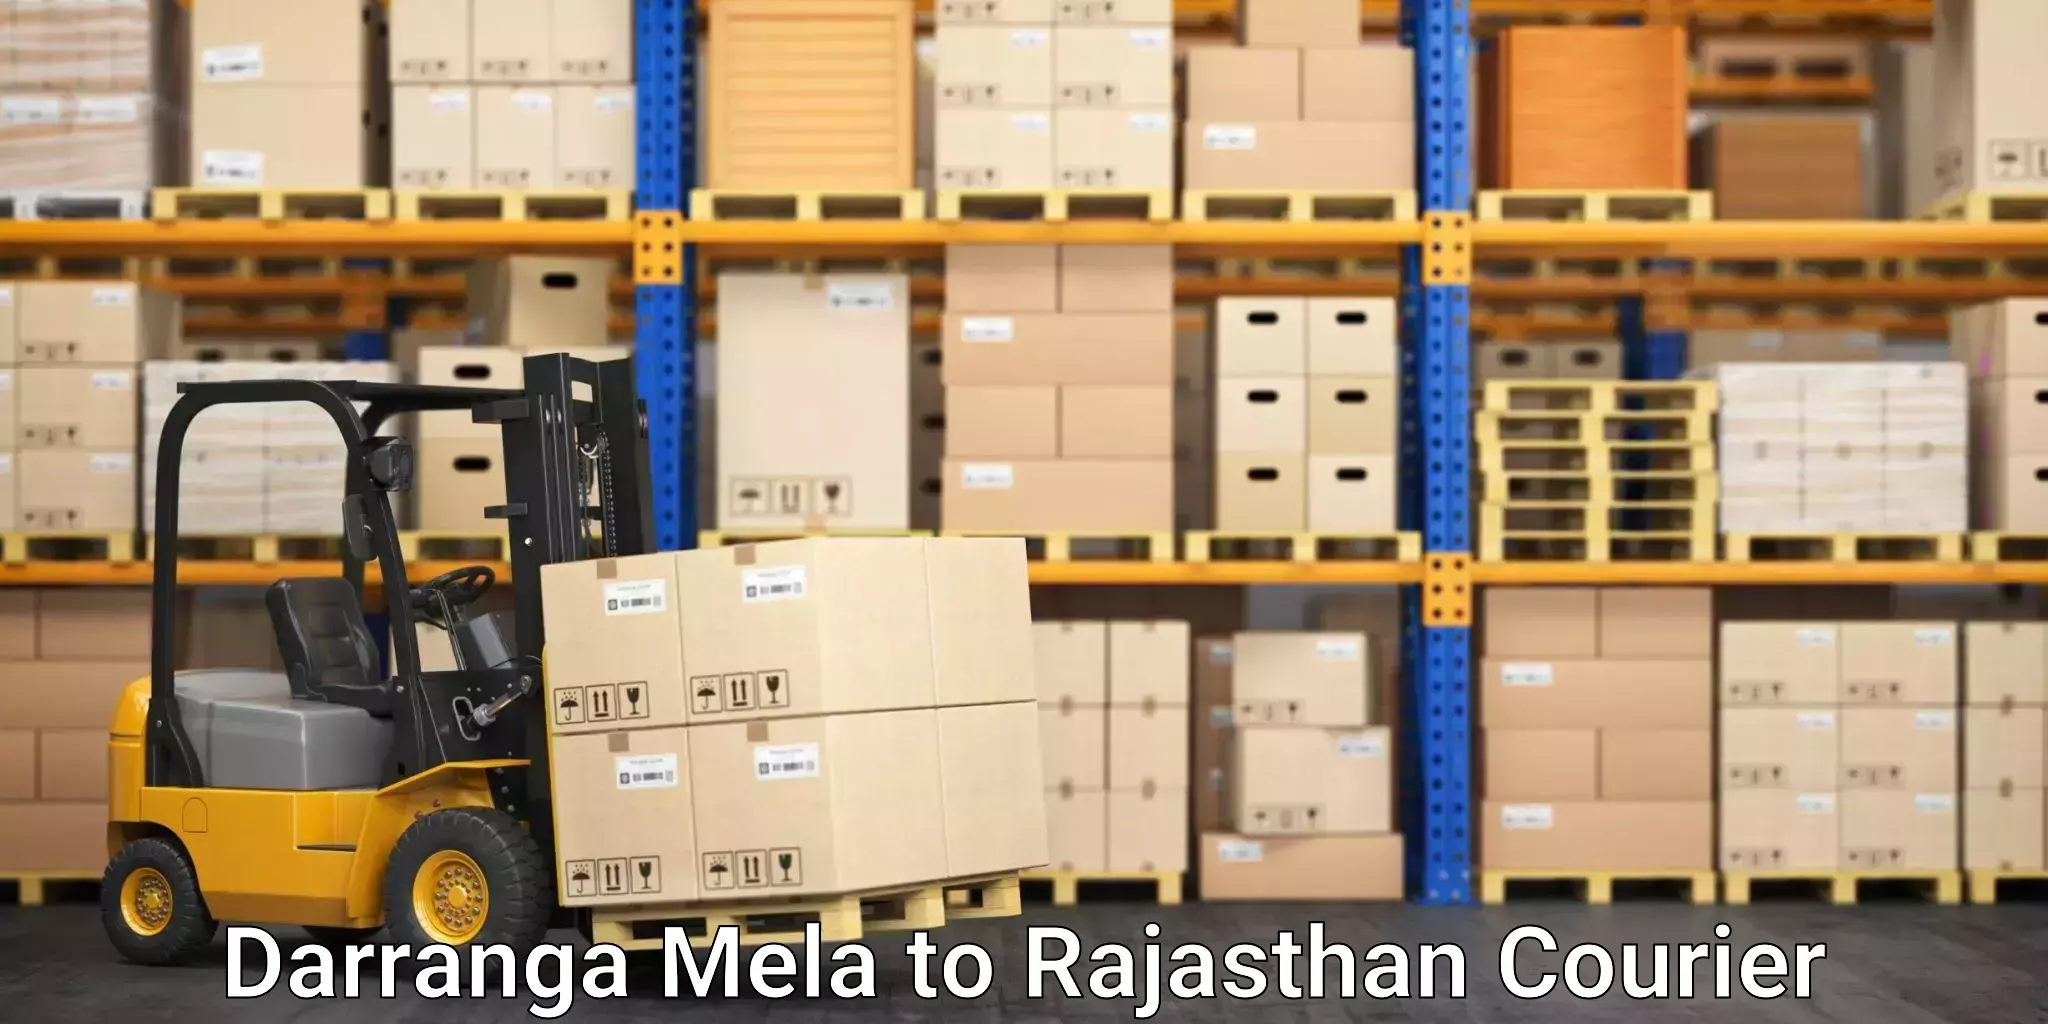 Logistics efficiency Darranga Mela to Keshoraipatan